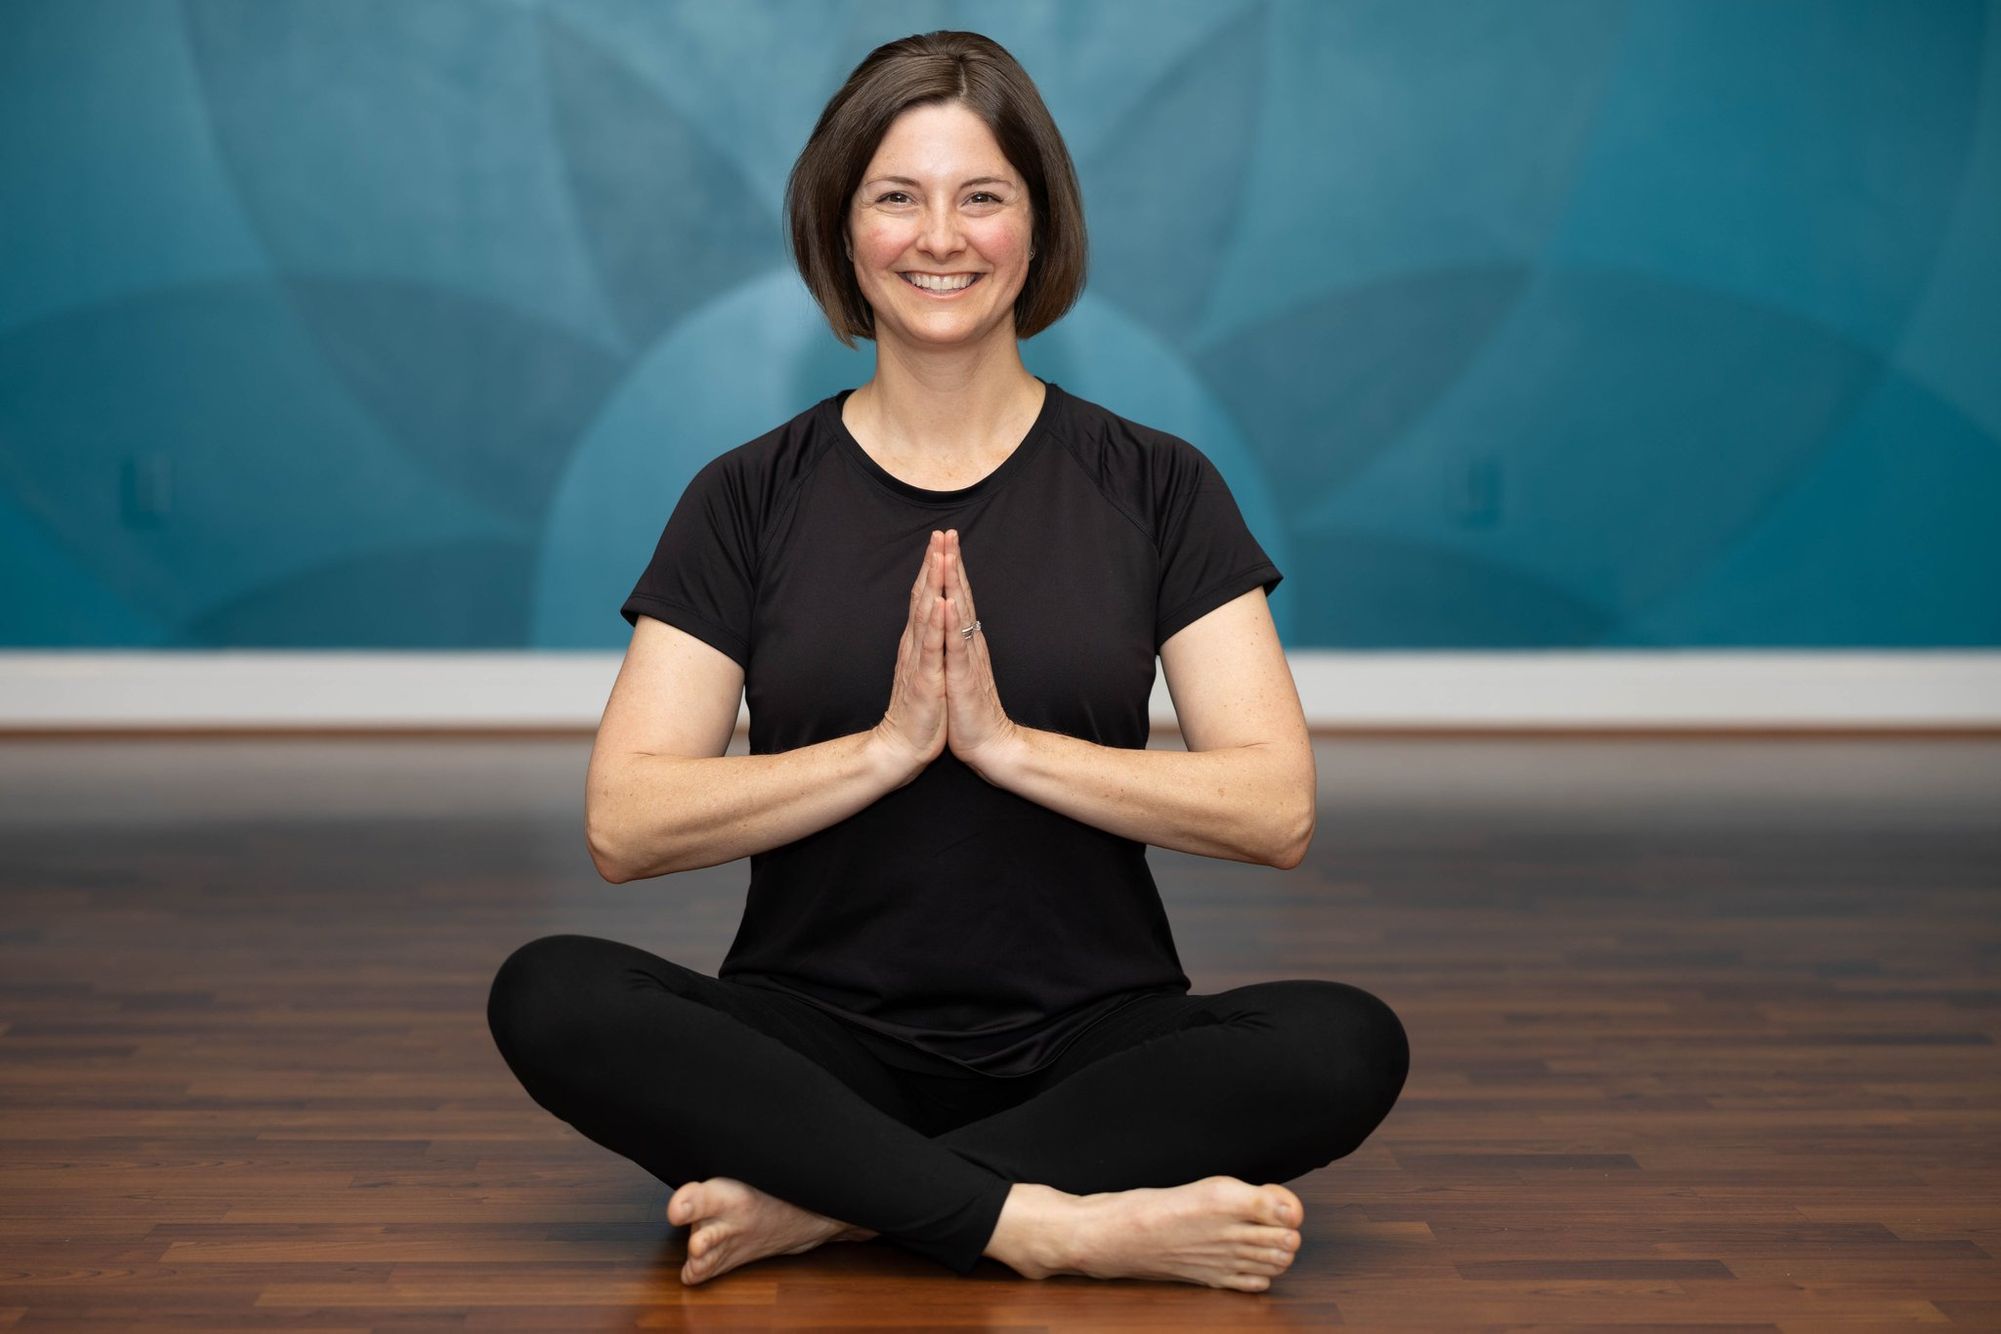 Yoga Alliance registered yoga teacher at Om Shanti Yoga studio